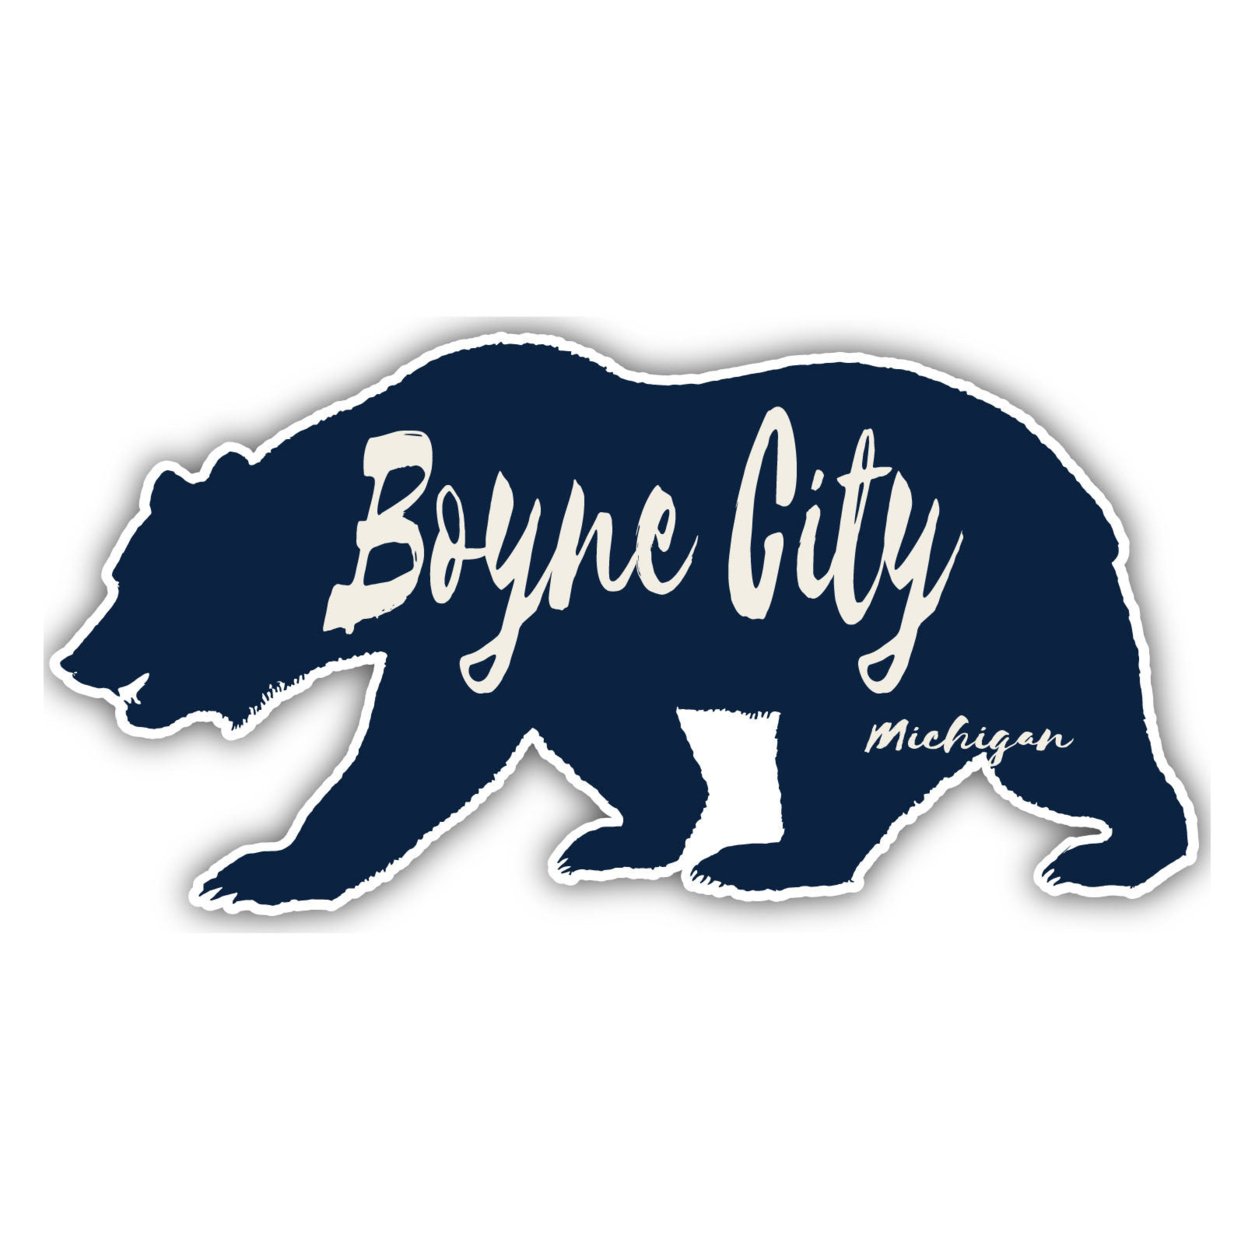 Boyne City Michigan Souvenir Decorative Stickers (Choose Theme And Size) - 4-Pack, 2-Inch, Tent